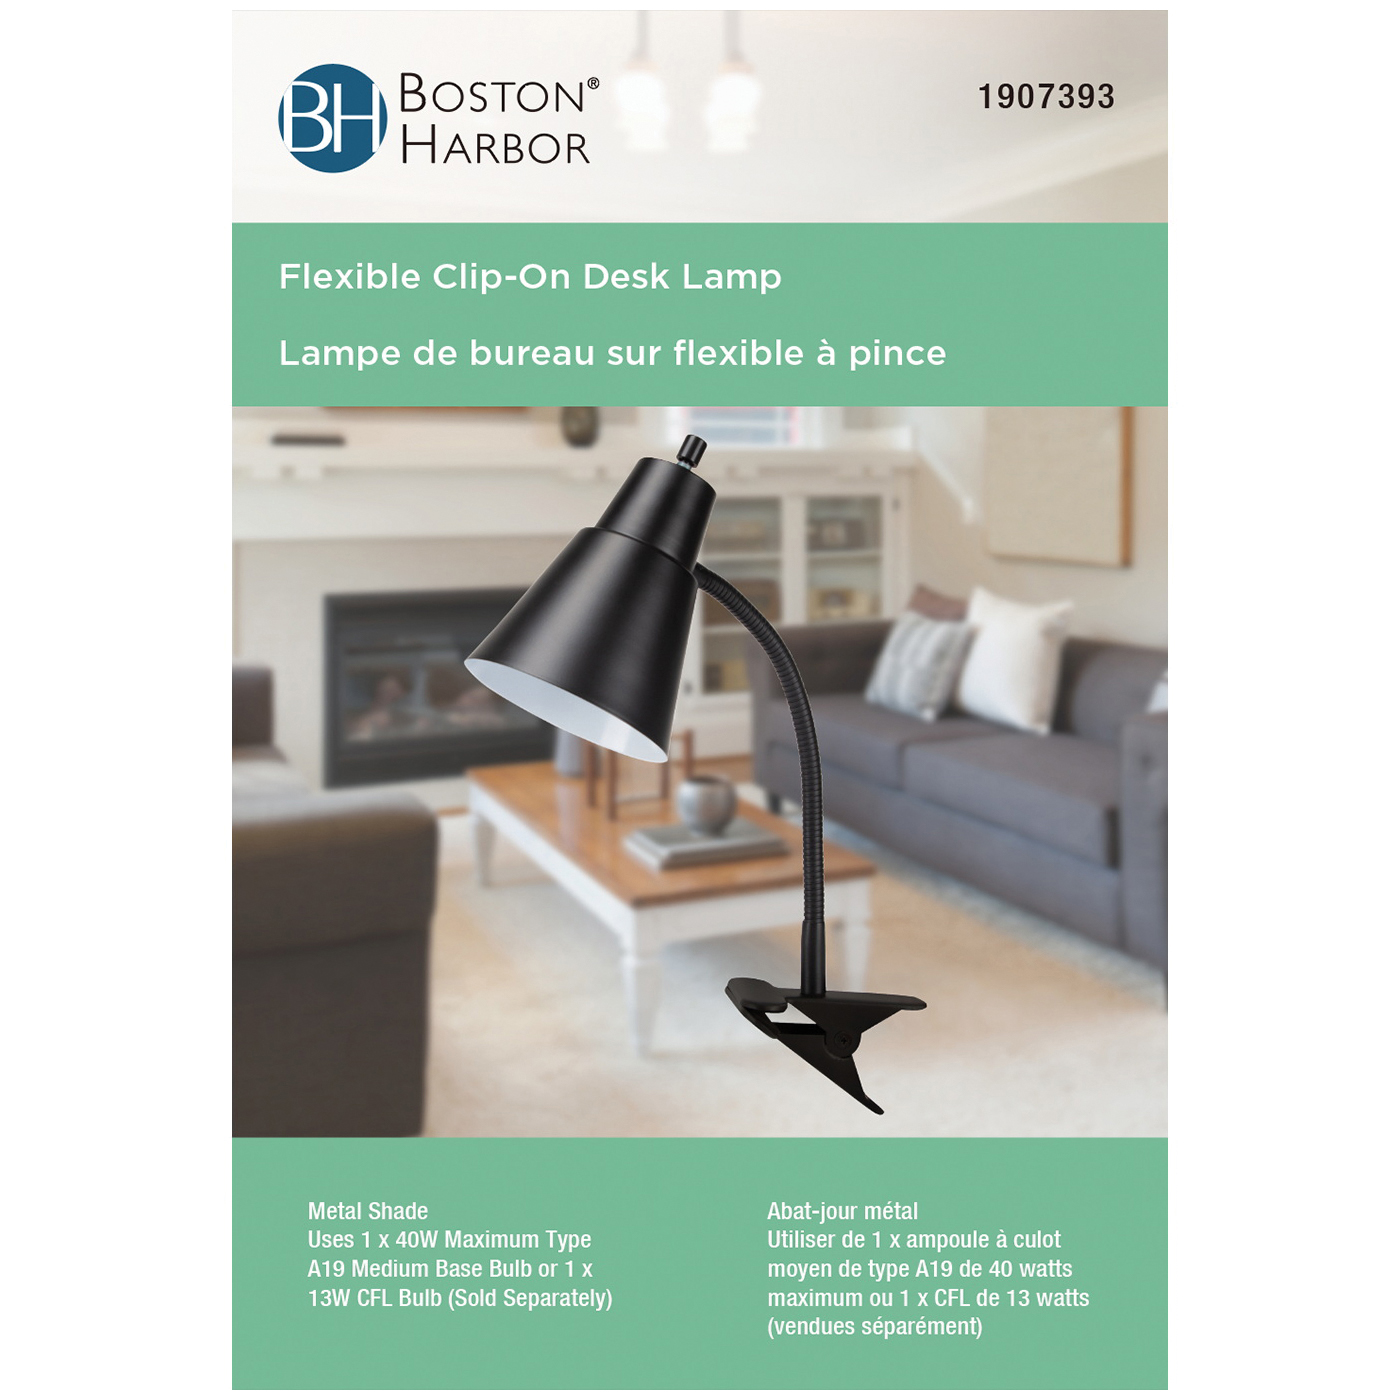 Boston Harbor TL-CL-170-BLACK3 Flexible Clip-On Desk Lamp, 120 V, 60 W, 1-Lamp, CFL Lamp, Black Fixture, Black - 3